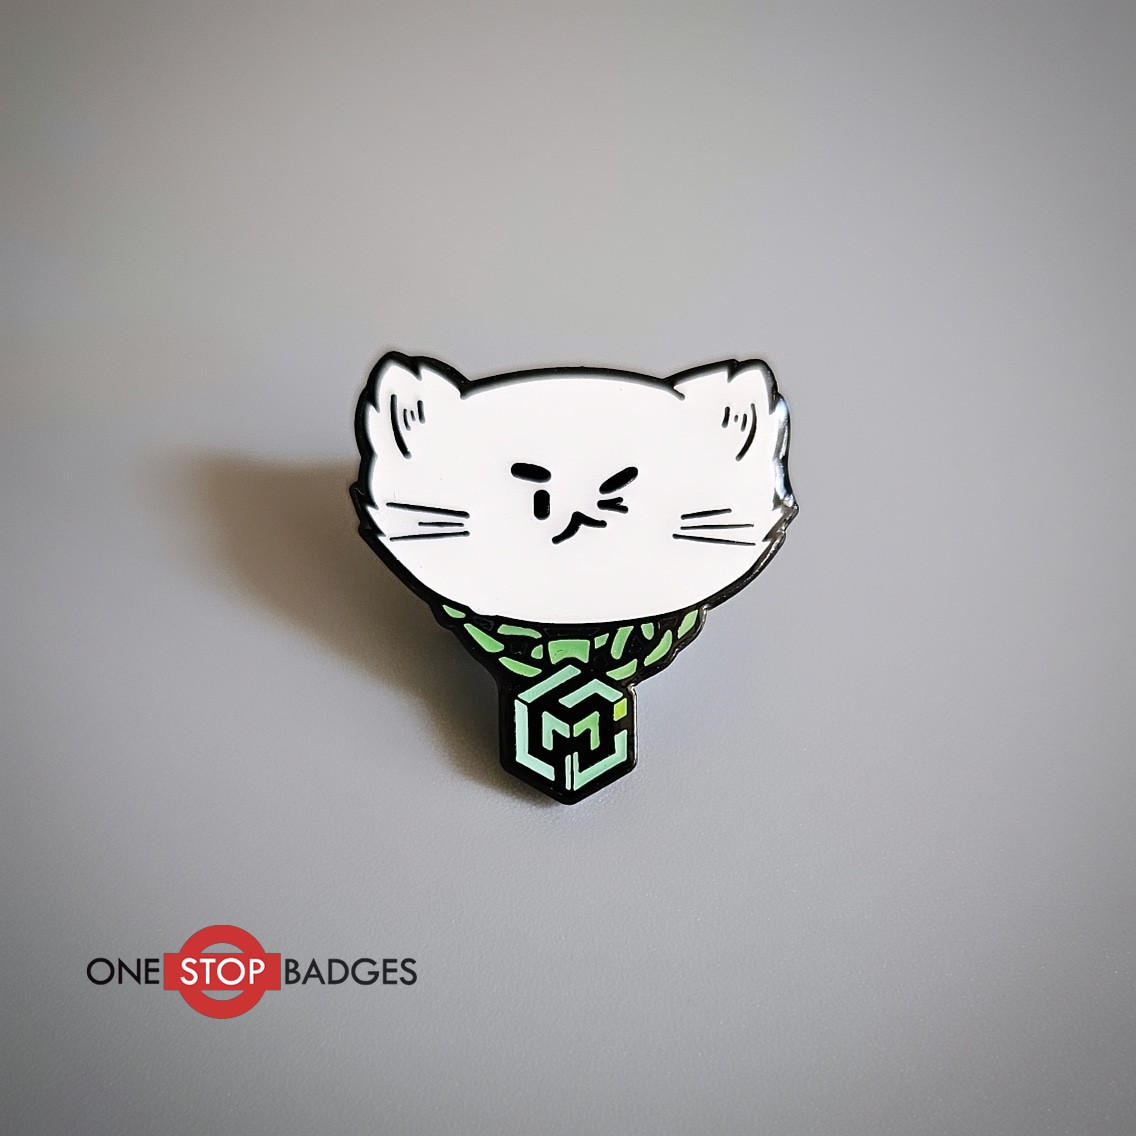 Soft Enamel Badges 🐱 #pinbadges #pins #badges #enamelpins #enamelpinbadges #enamelbadges #pindesign #lapelpin #custompins #custombadges #softenamelpins #personalisedpins #catpin #logo #cat